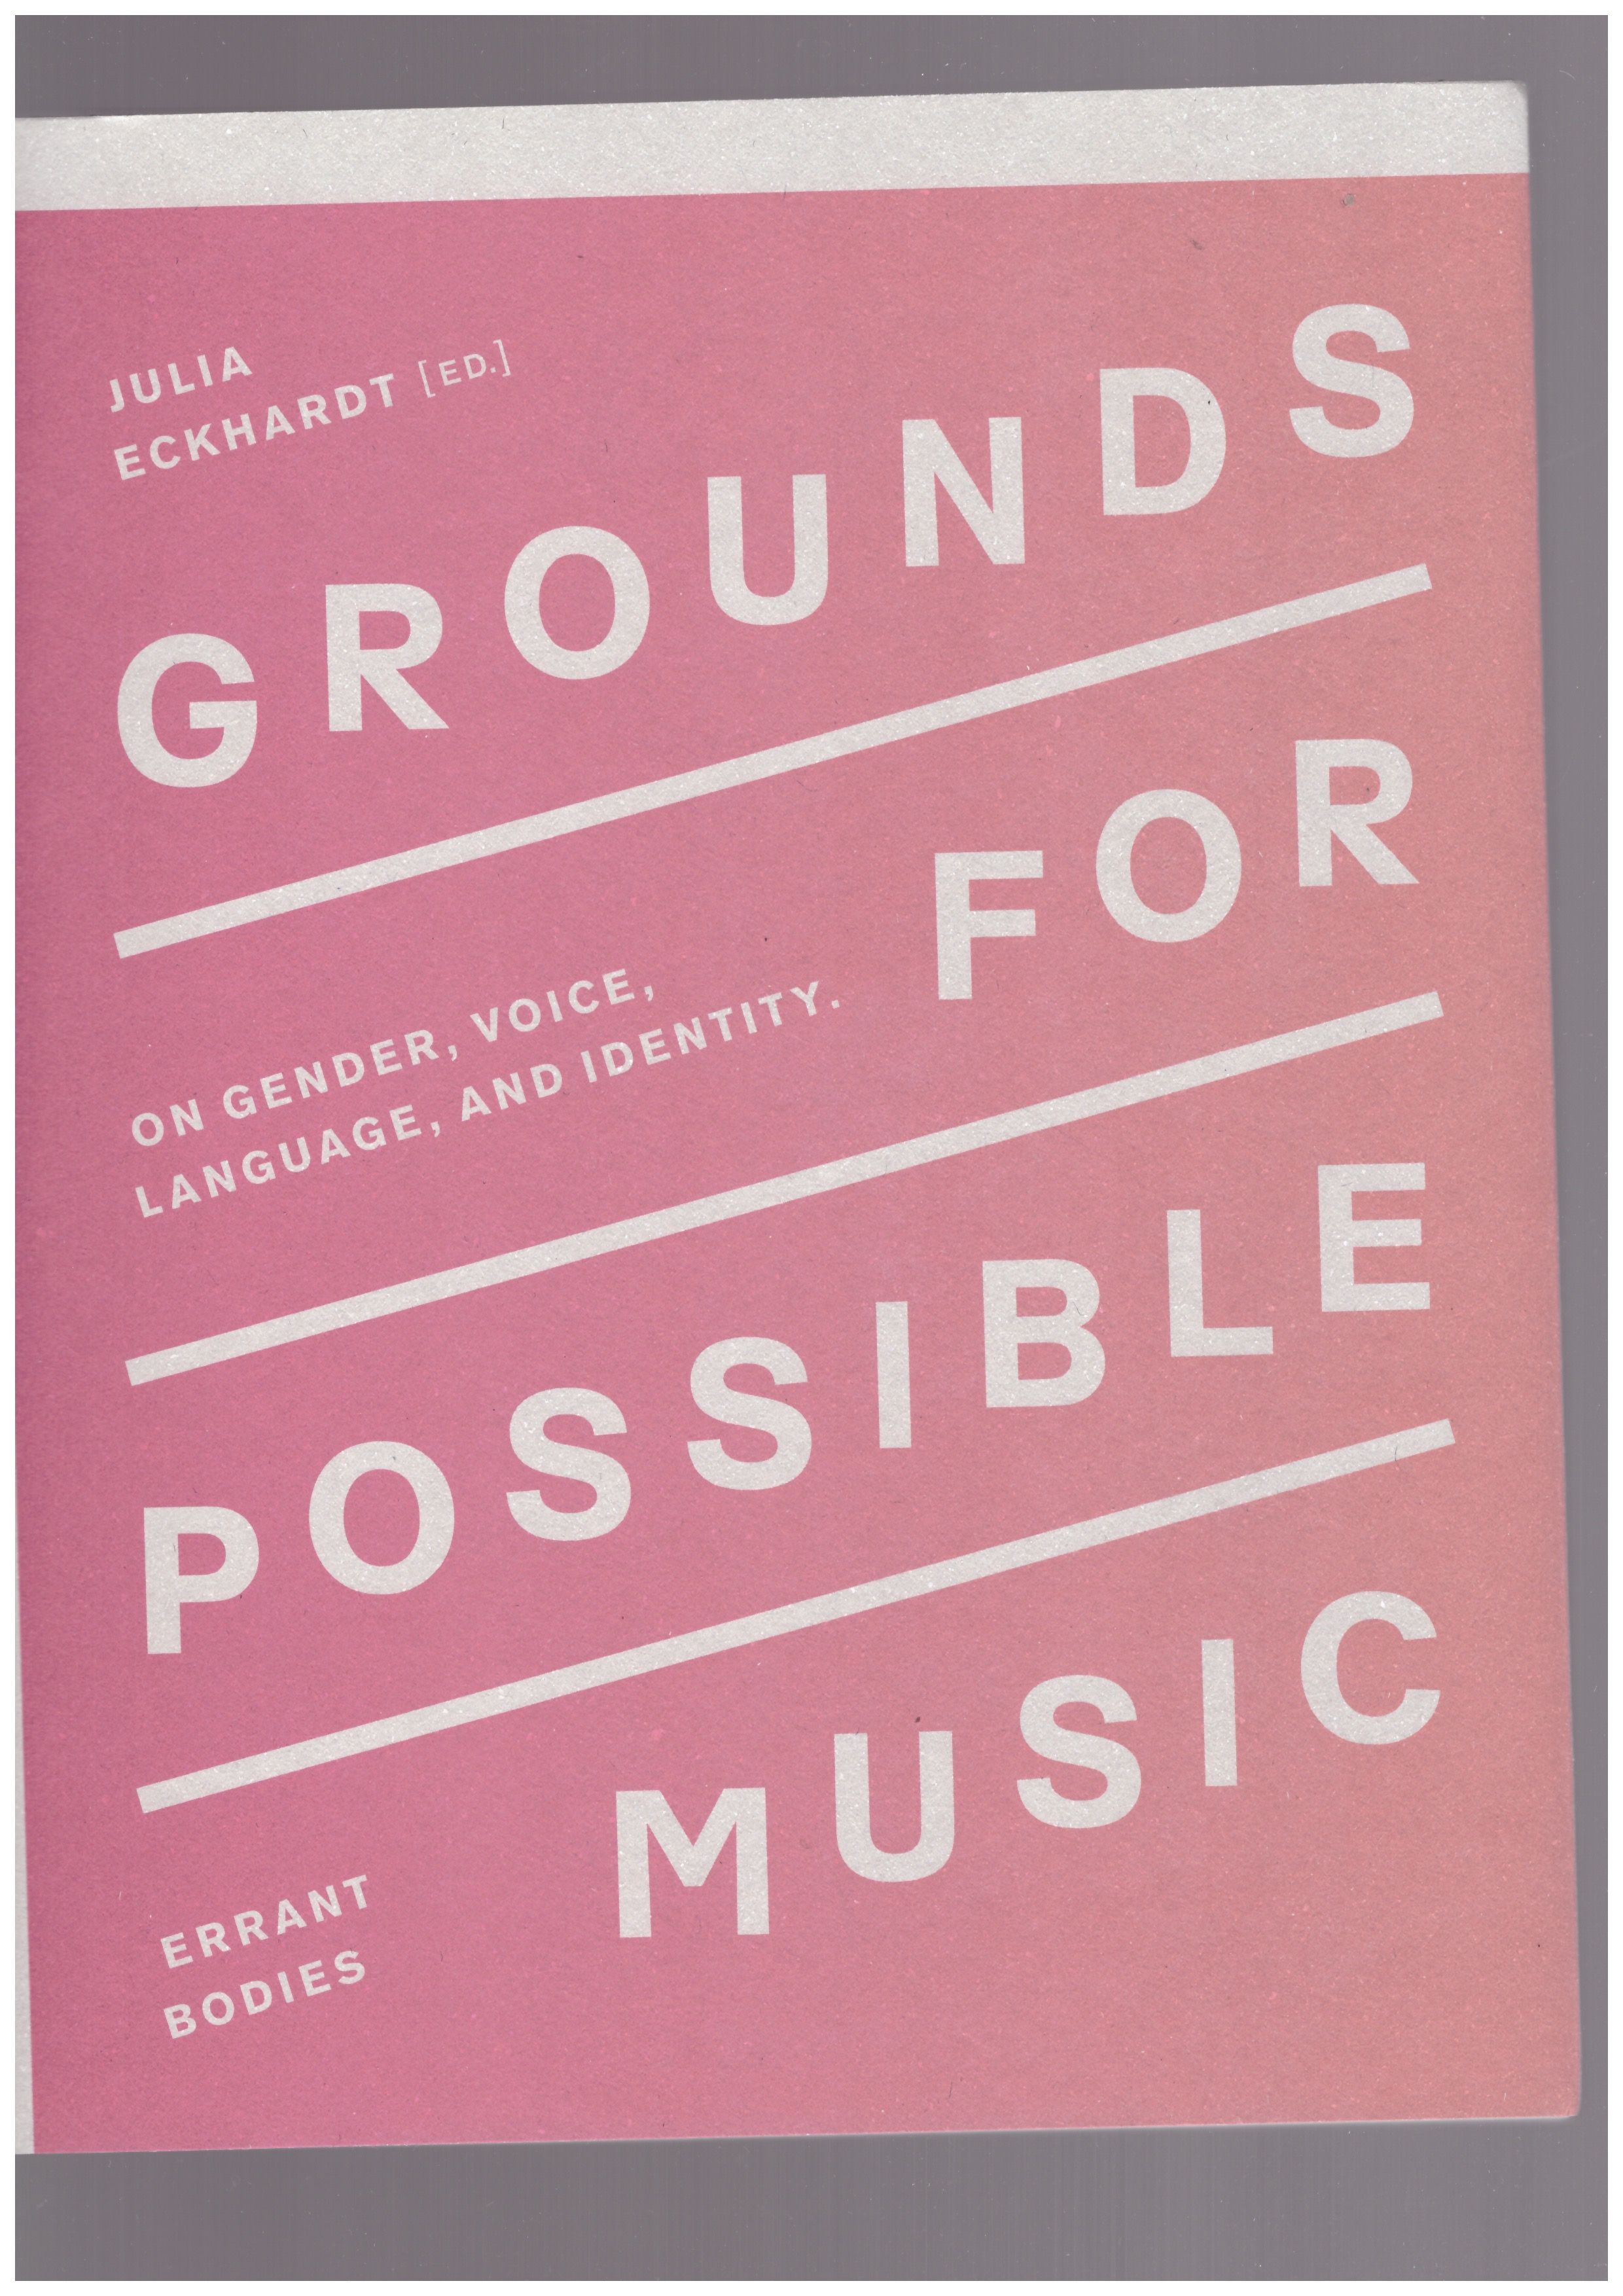 ECKHARDT, Julie (ed.) - Grounds for possible music